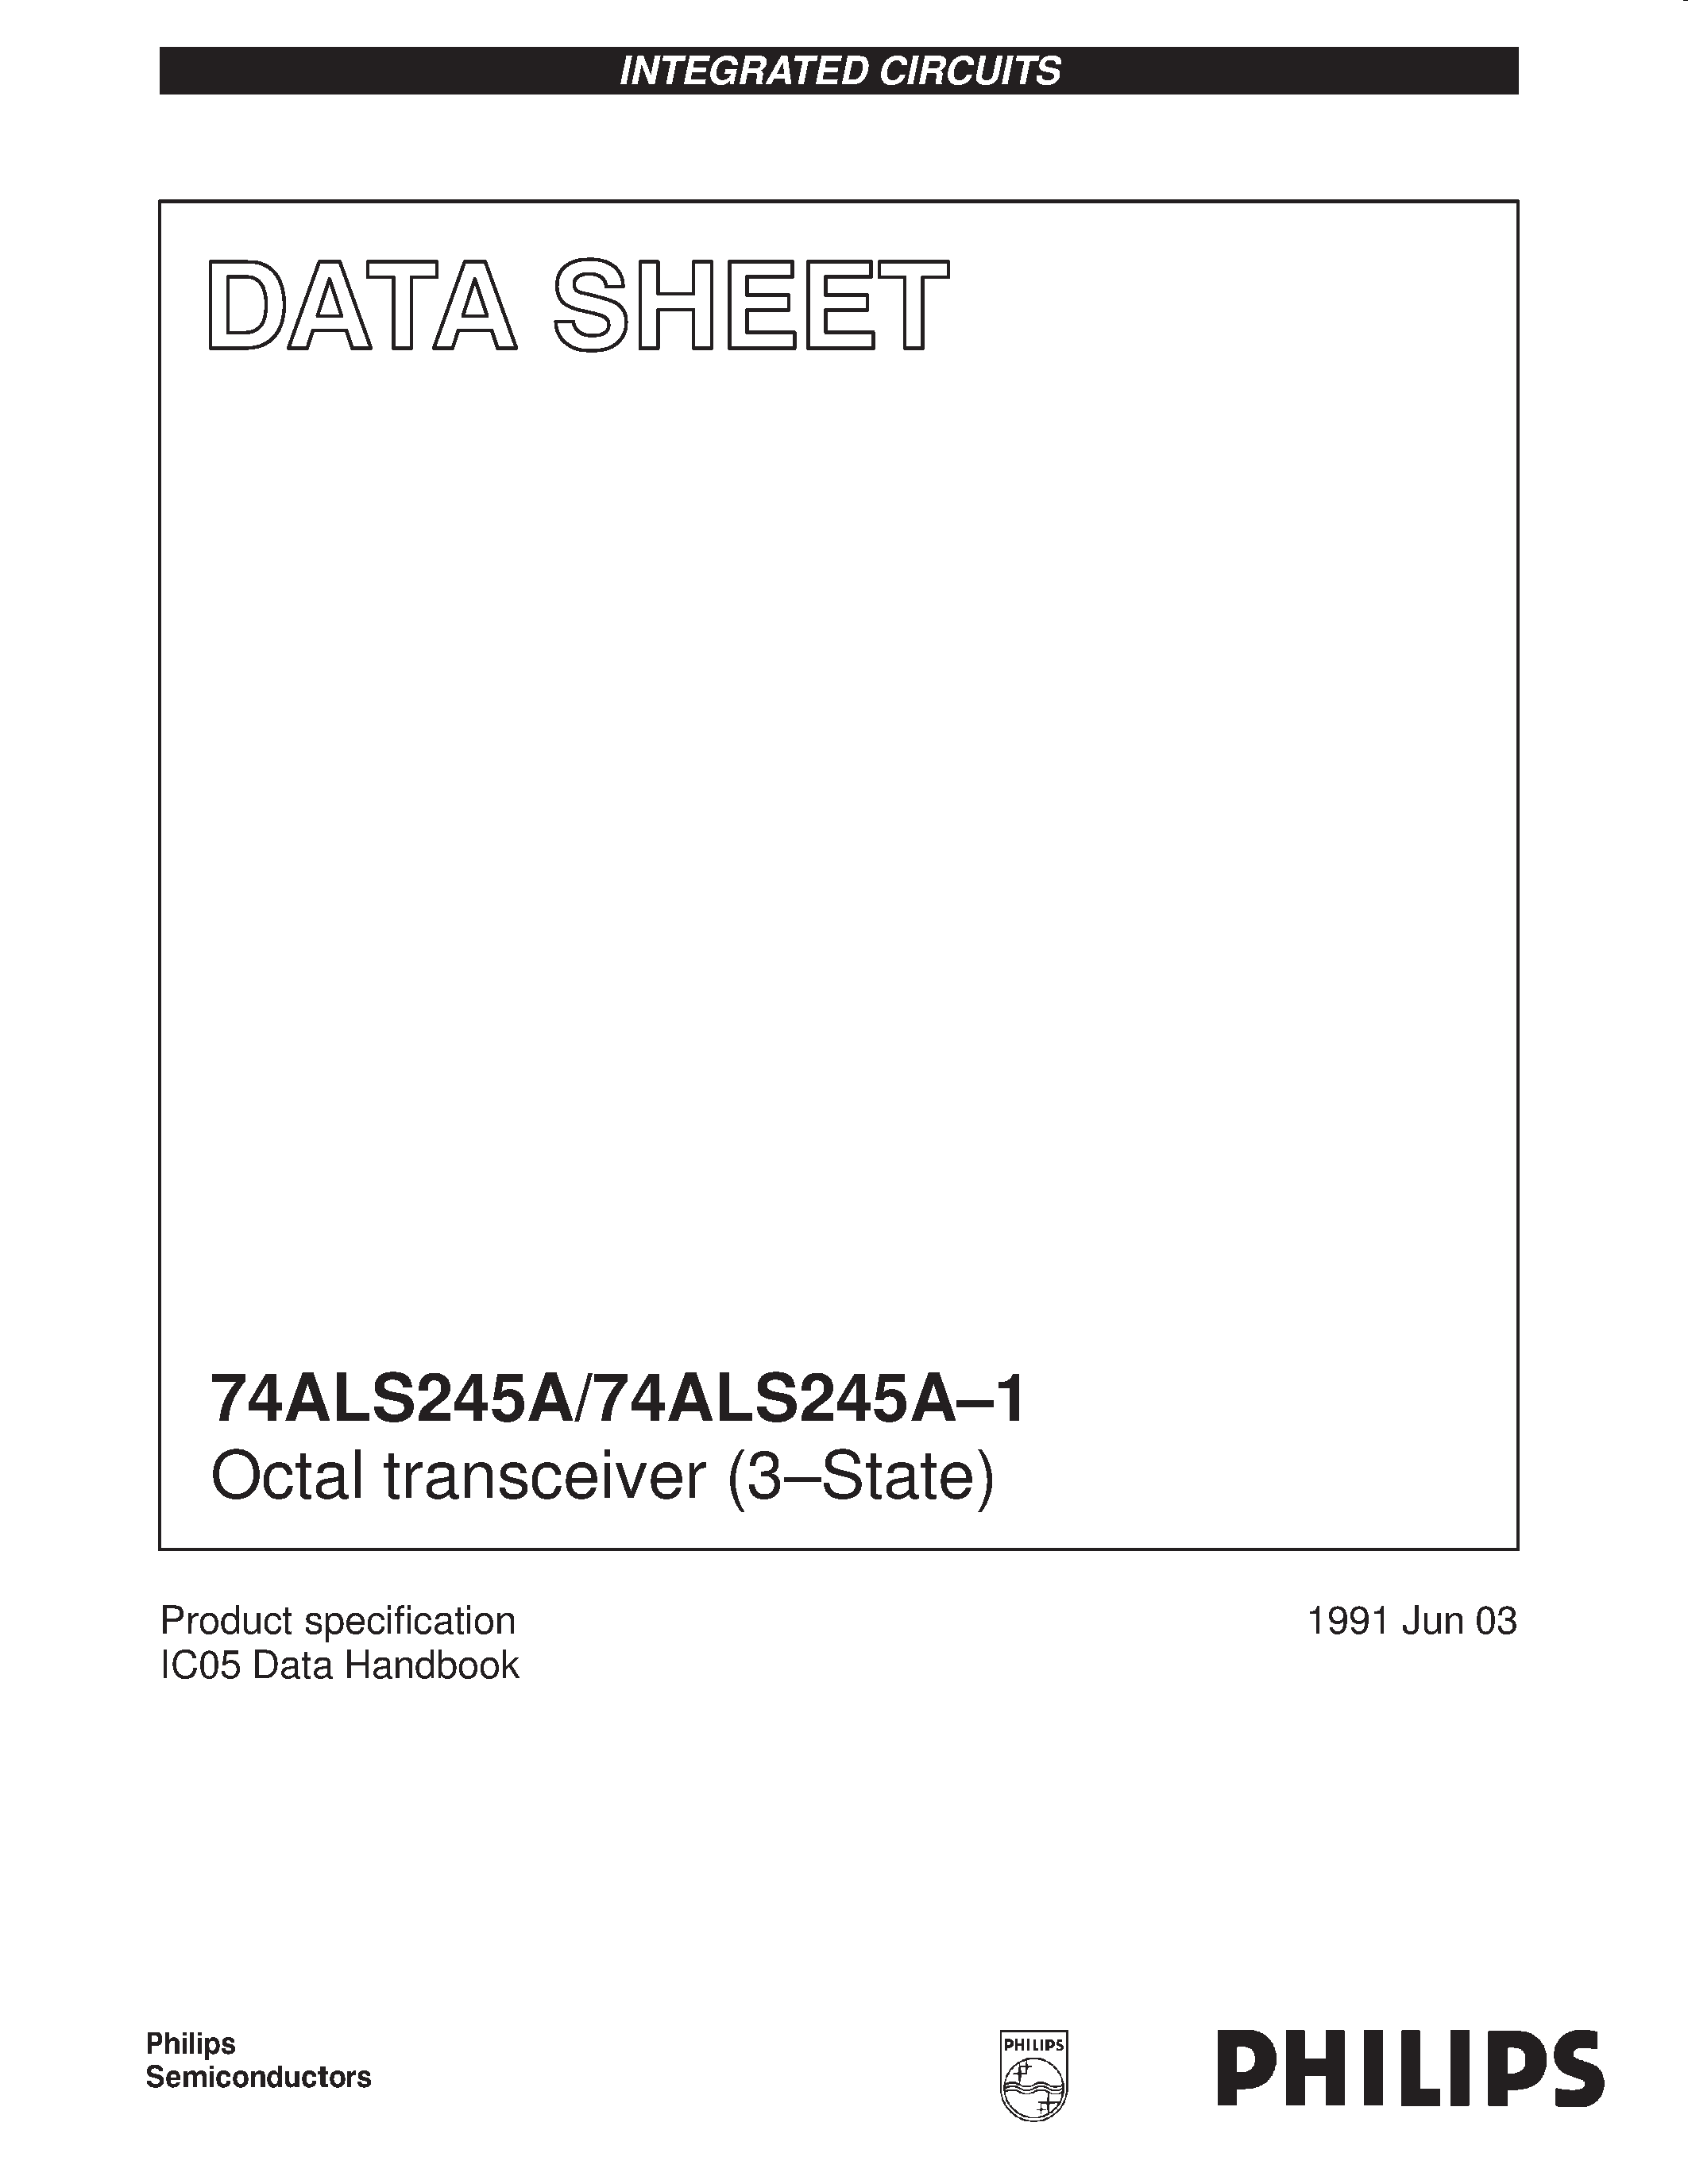 Даташит 744ALS245A-1D - Octal transceiver 3-State страница 1